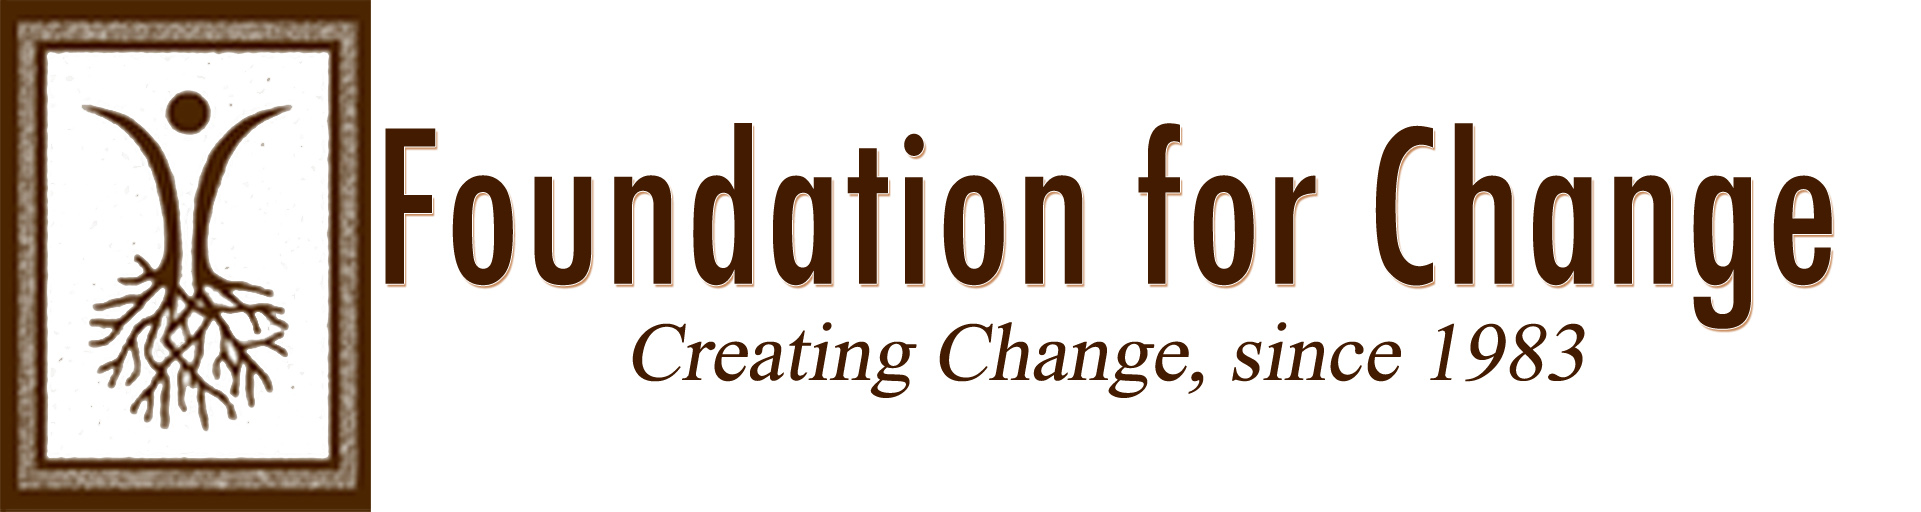 San Diego Foundation for Change logo